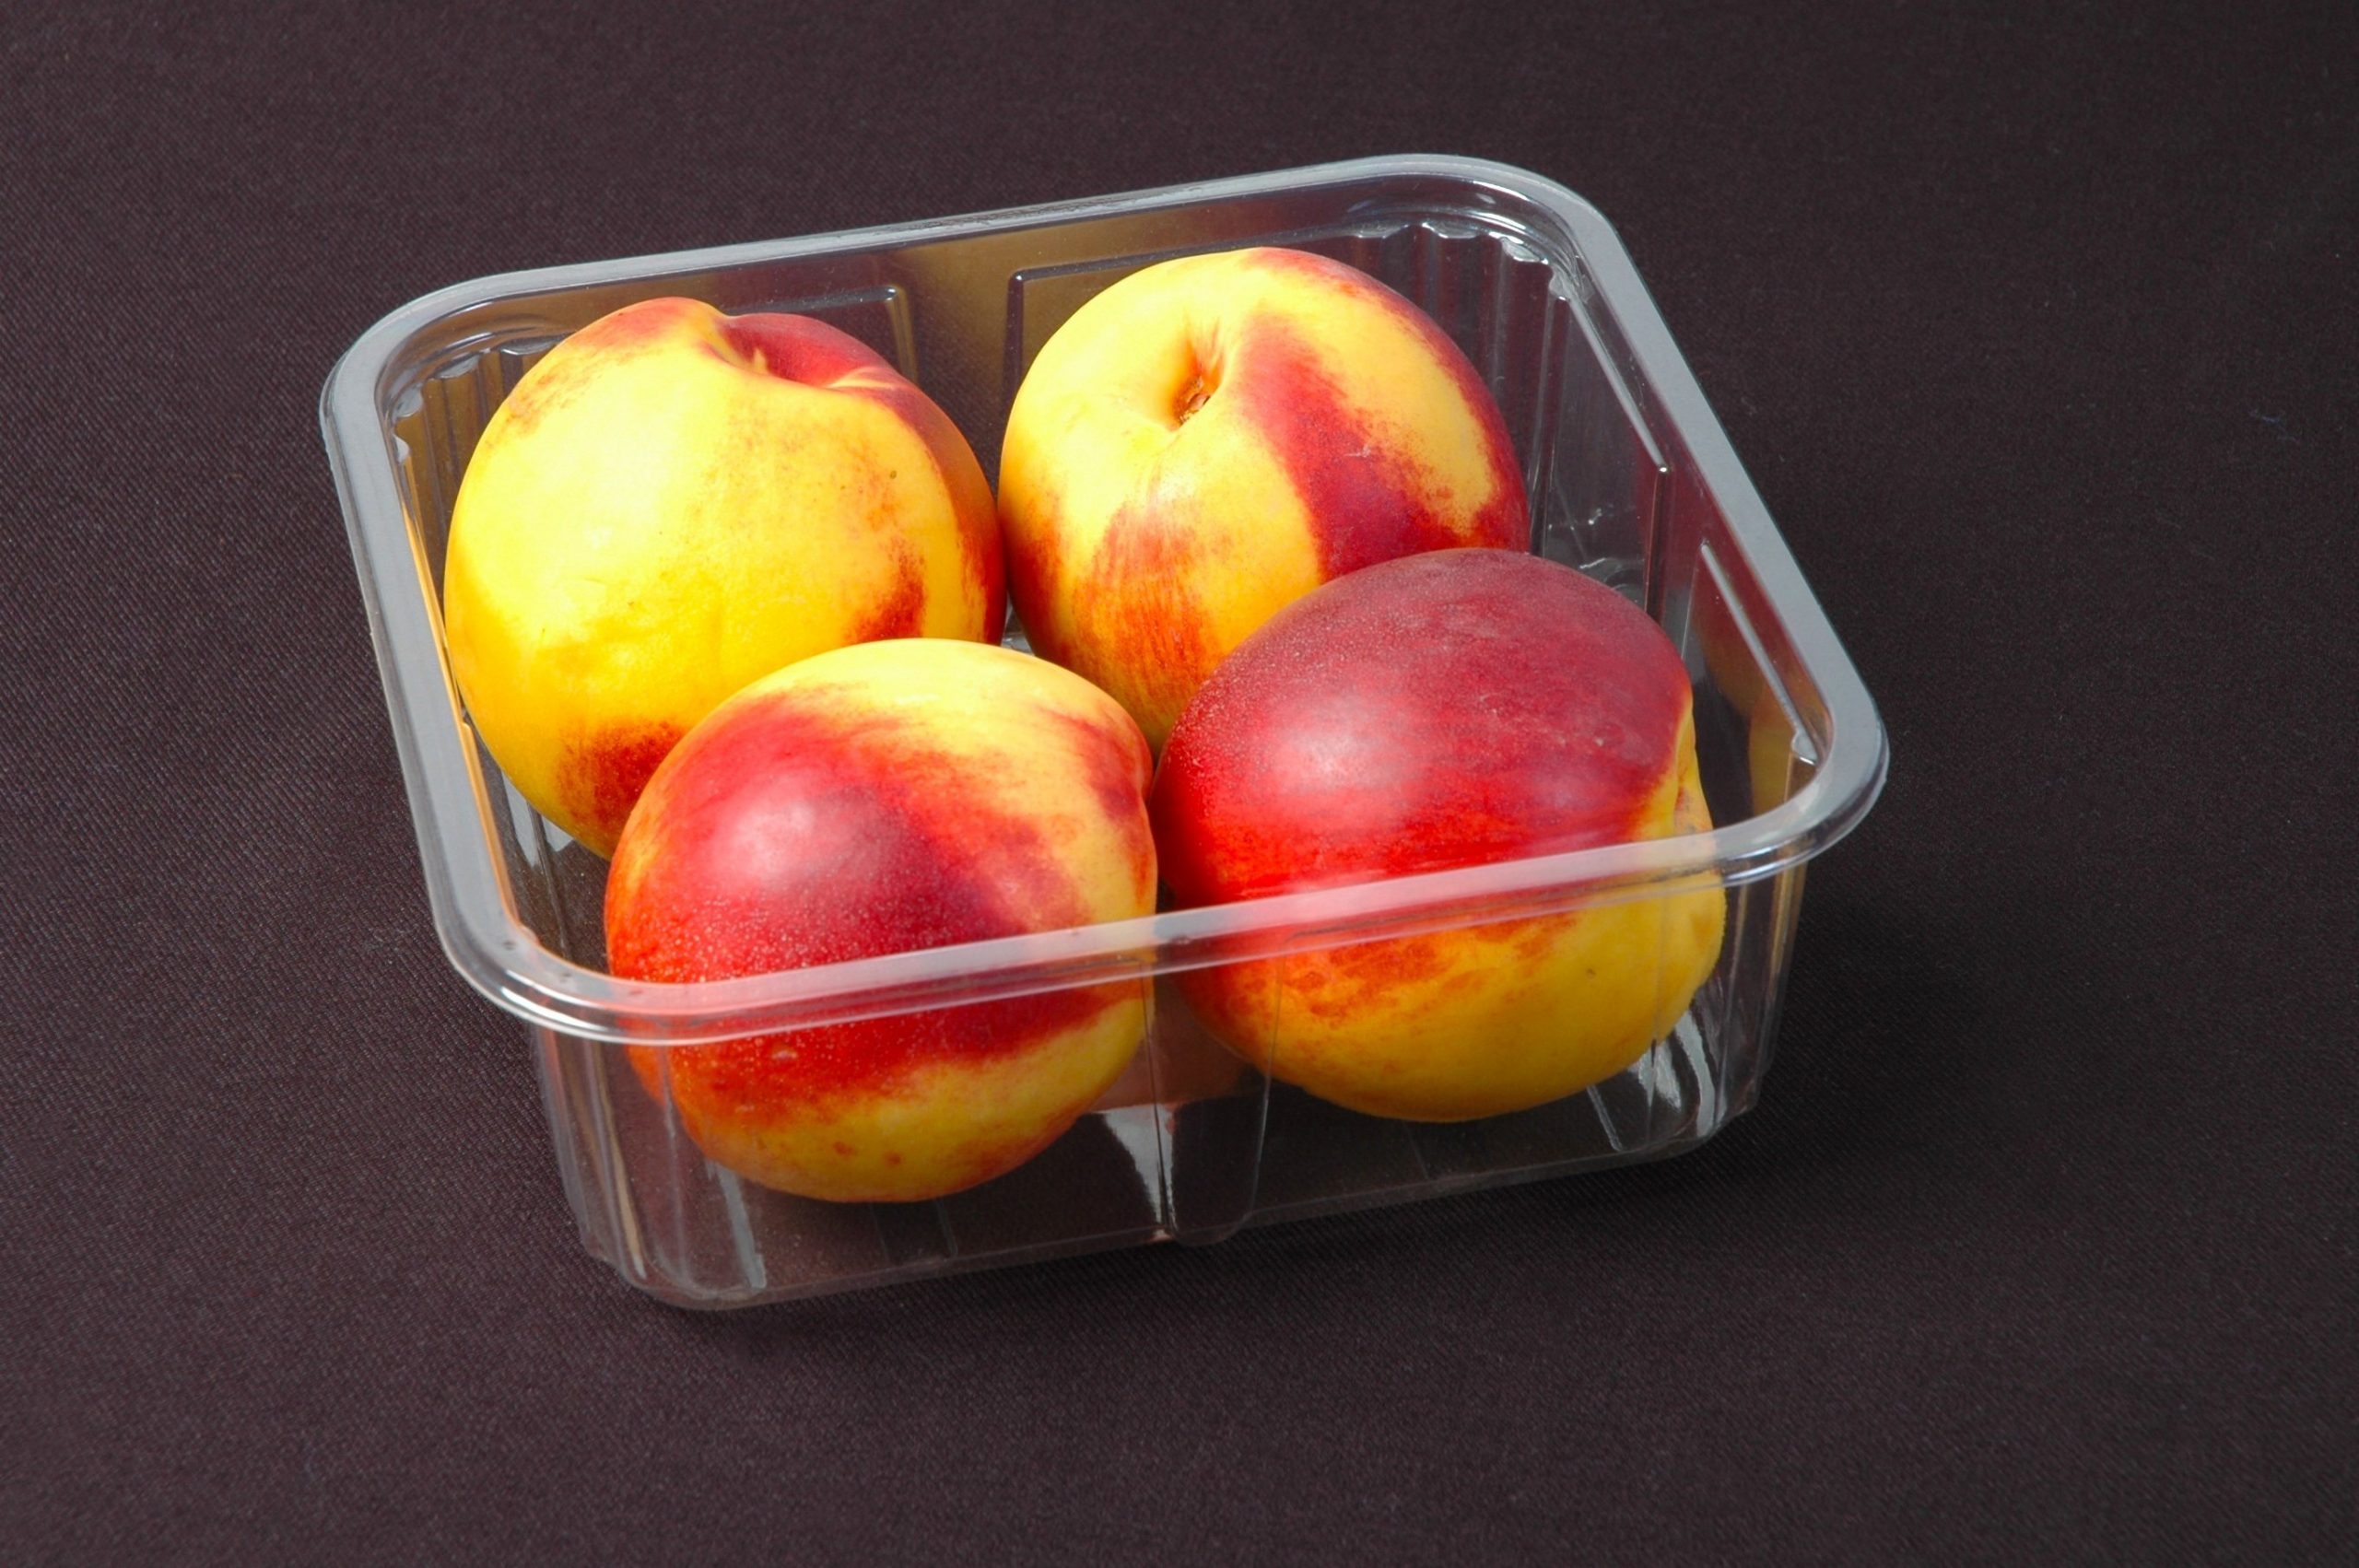 apple-plant-fruit-food-produce-snack-859836-pxhere.com